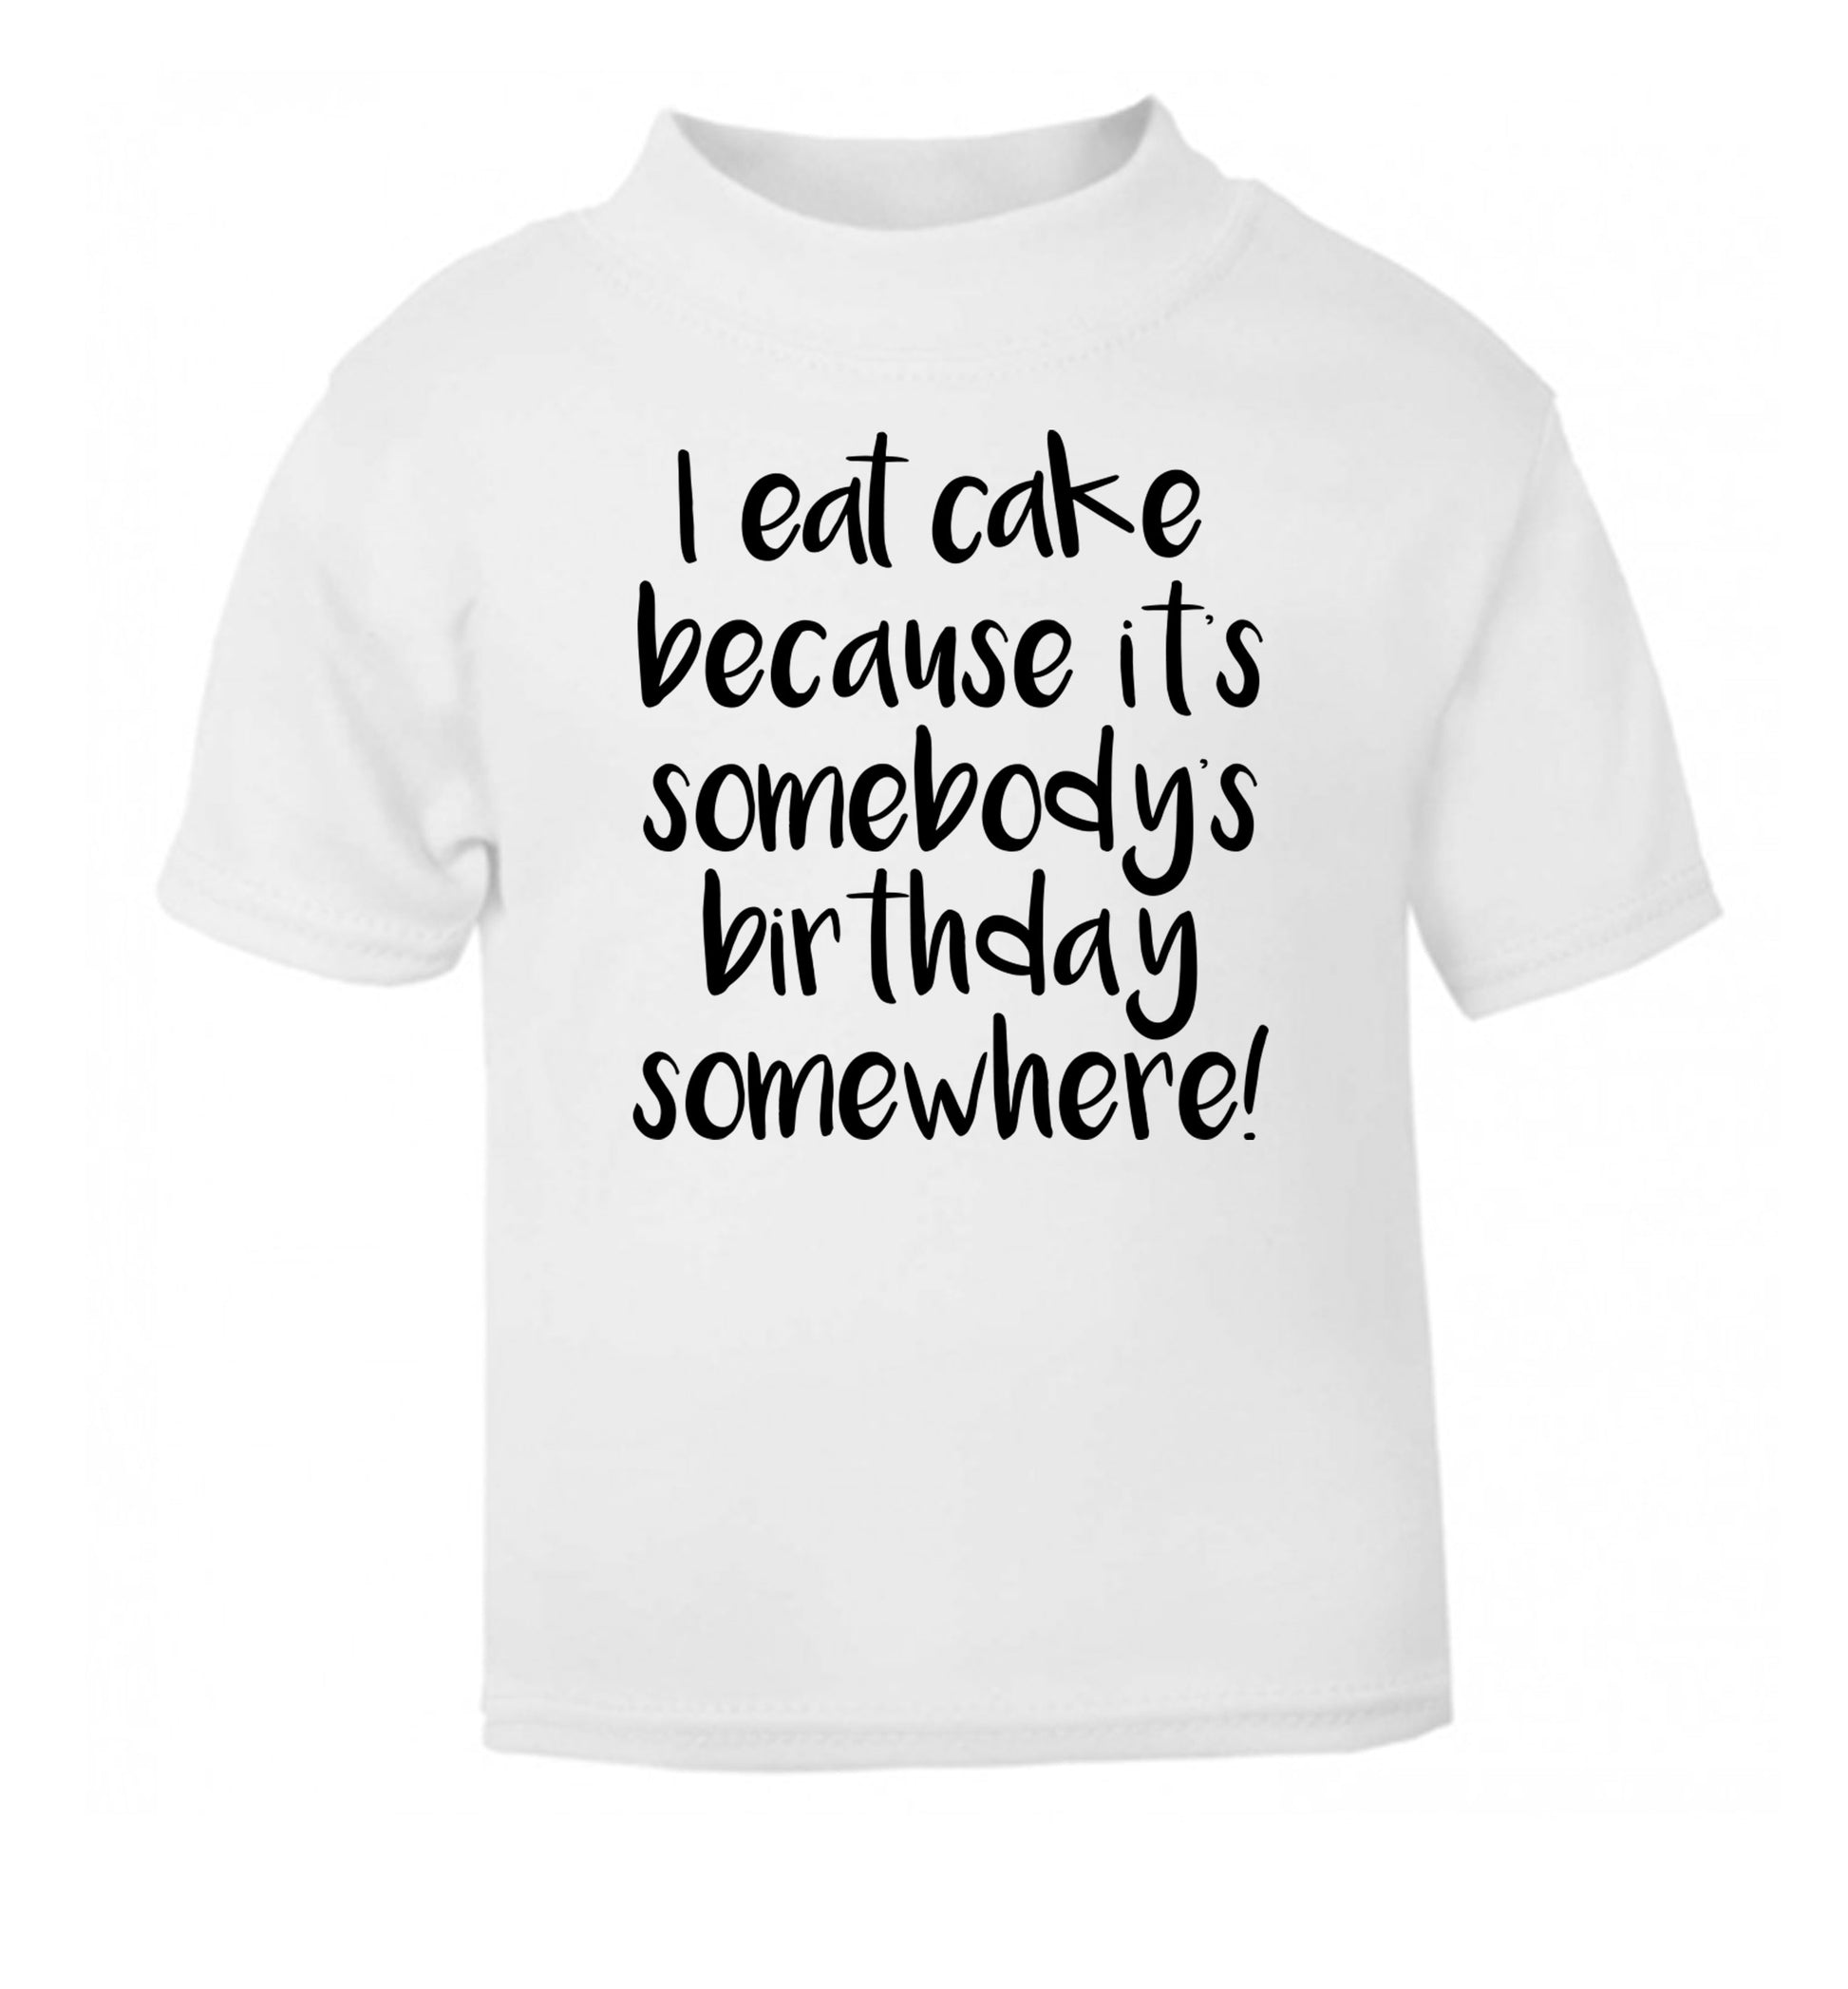 I eat cake because it's somebody's birthday somewhere! white Baby Toddler Tshirt 2 Years